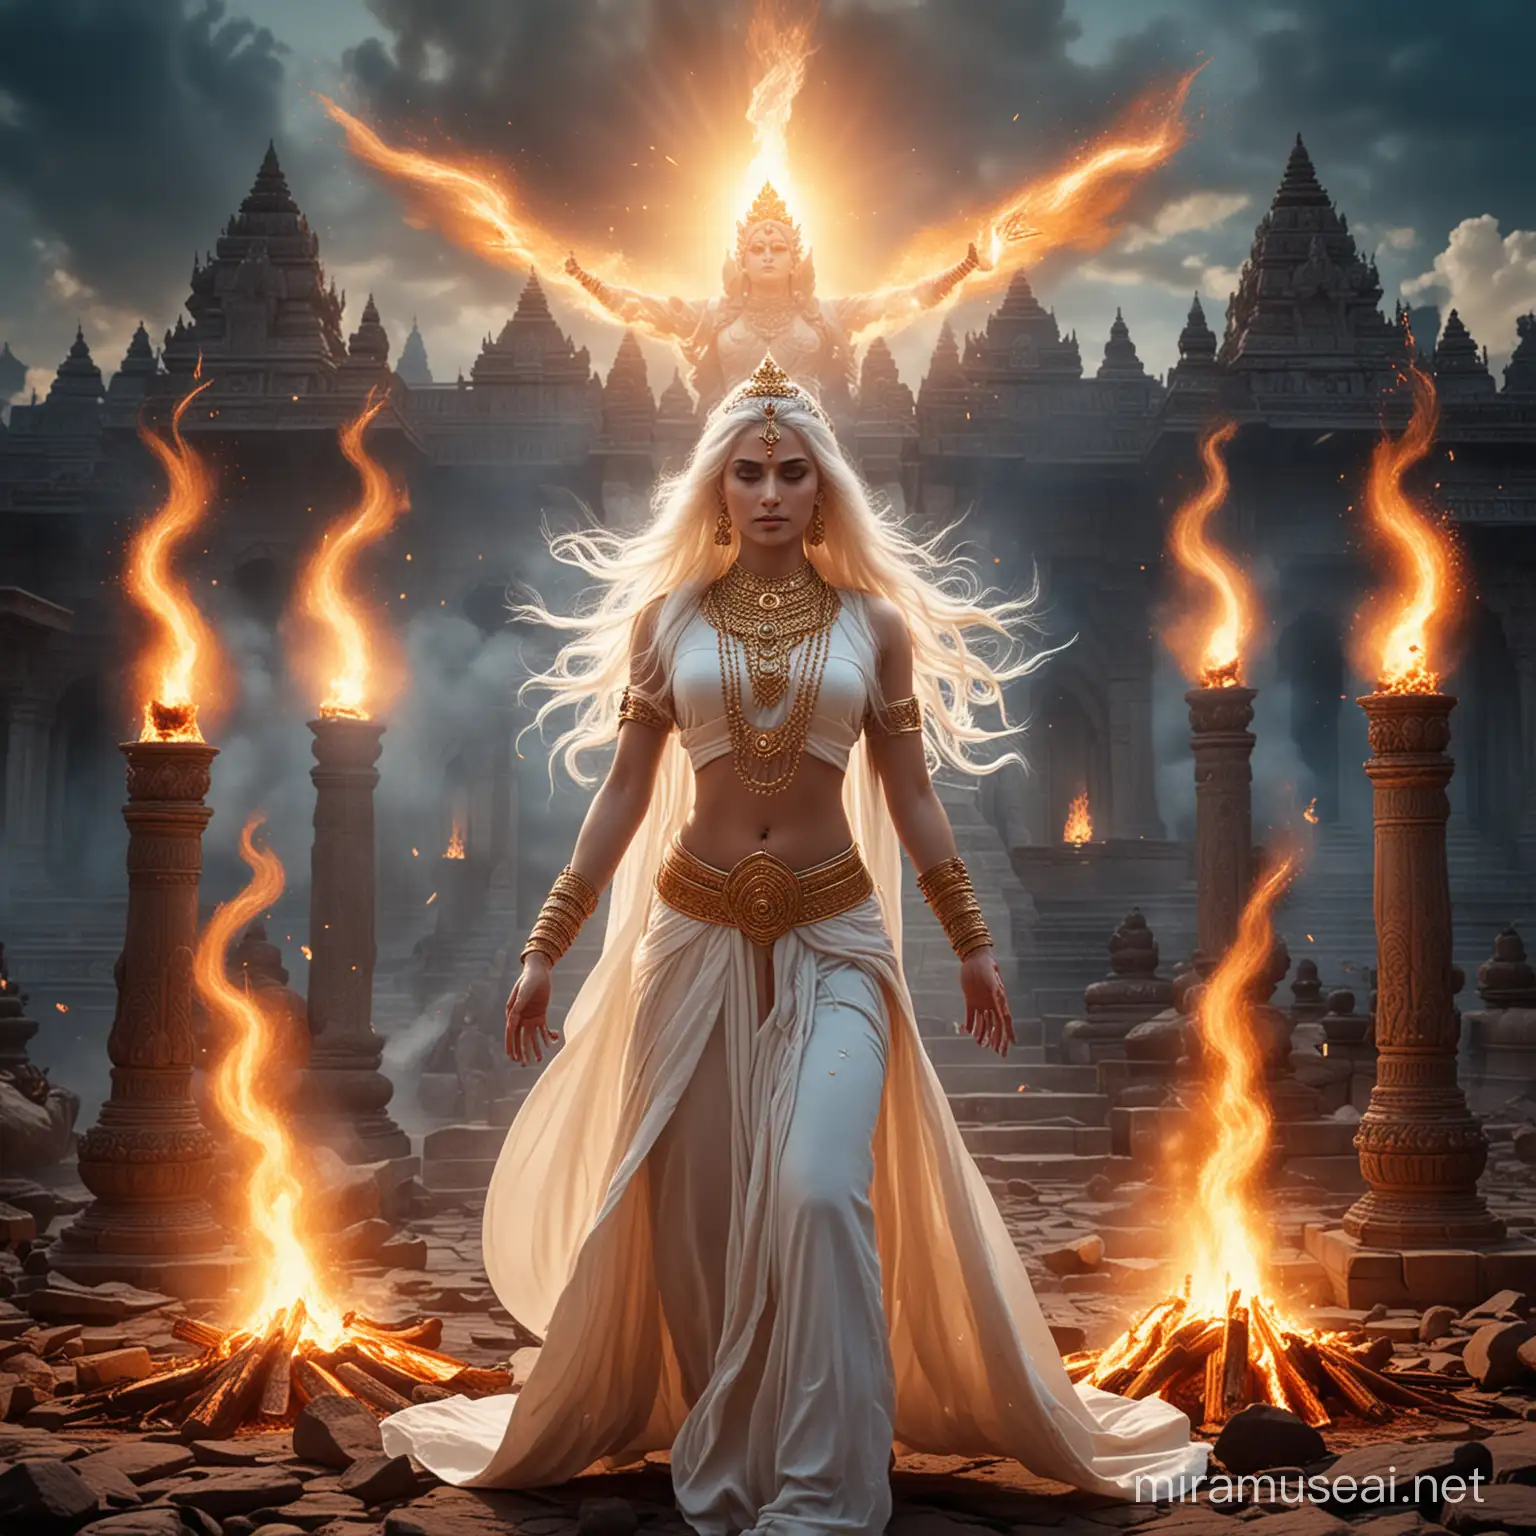 Powerful Hindu Empress Meditating and Wielding Fire in Battle